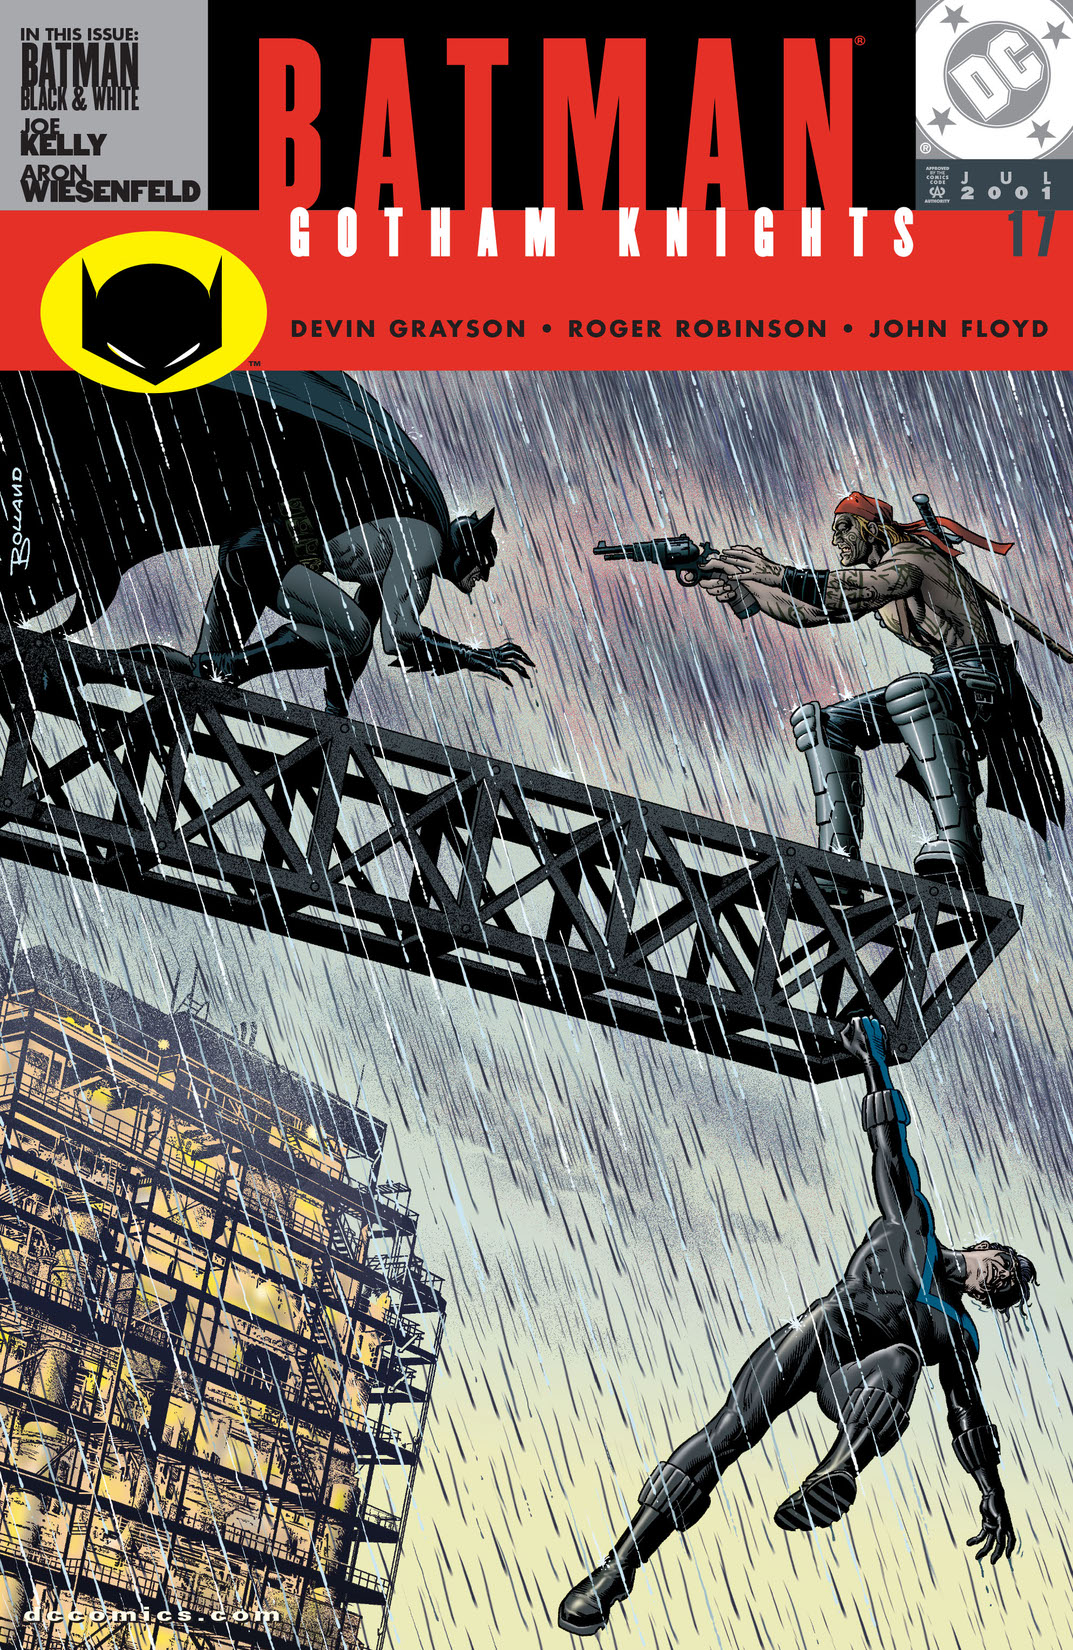 Batman: Gotham Knights #17 preview images